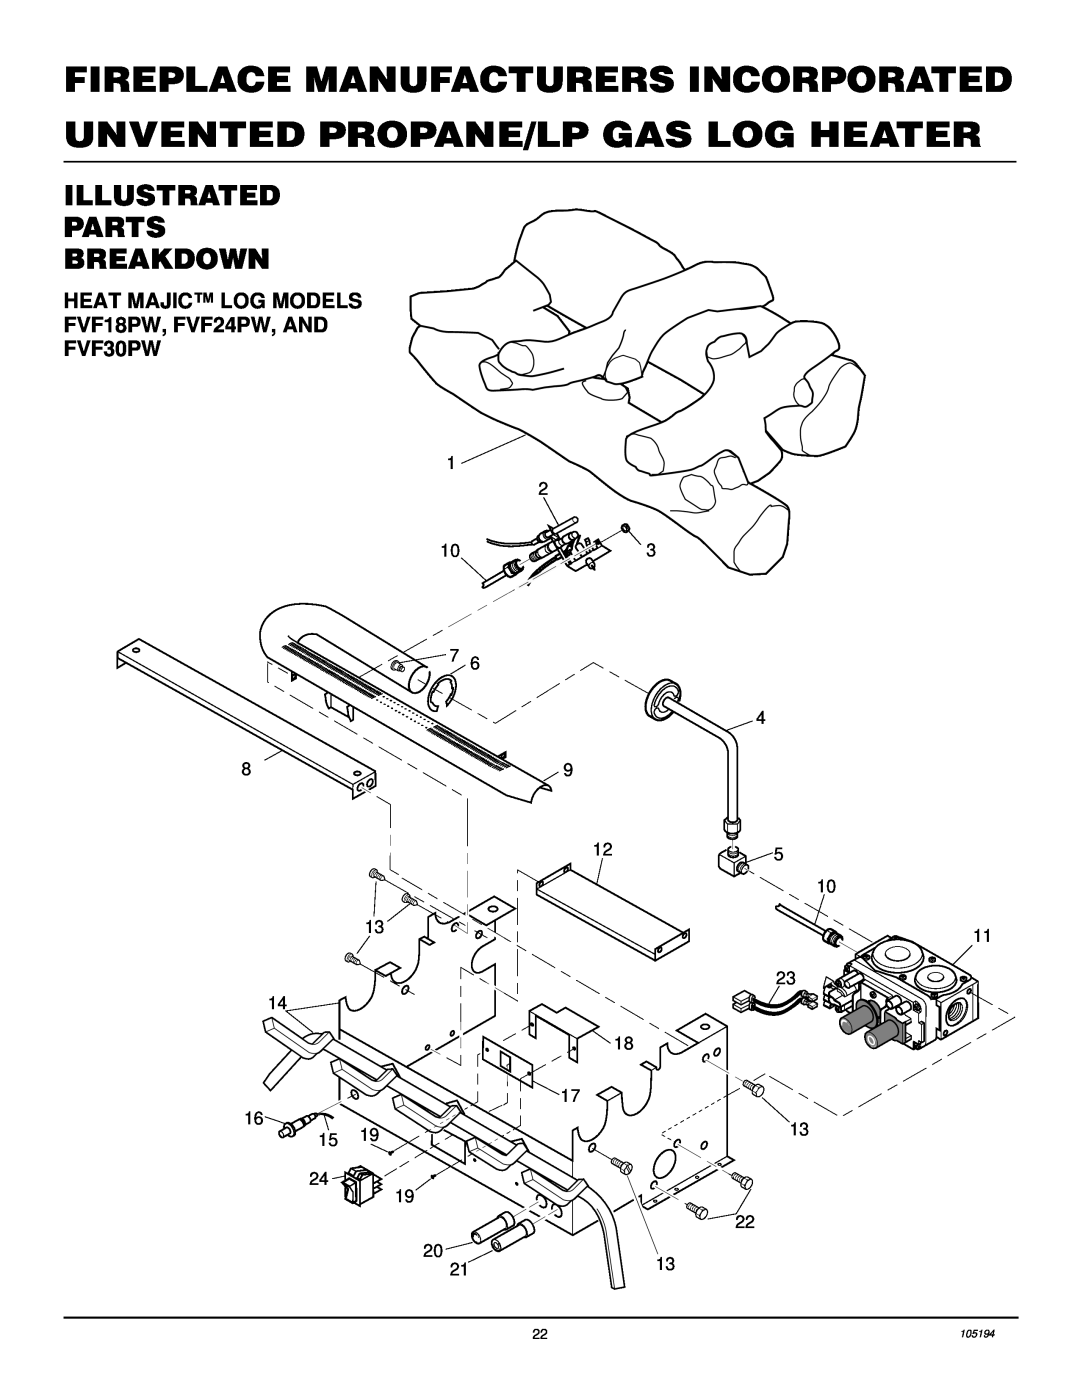 FMI installation manual Illustrated Parts Breakdown, HEAT MAJIC LOG MODELS FVF18PW, FVF24PW, AND FVF30PW, 105194, To L P 